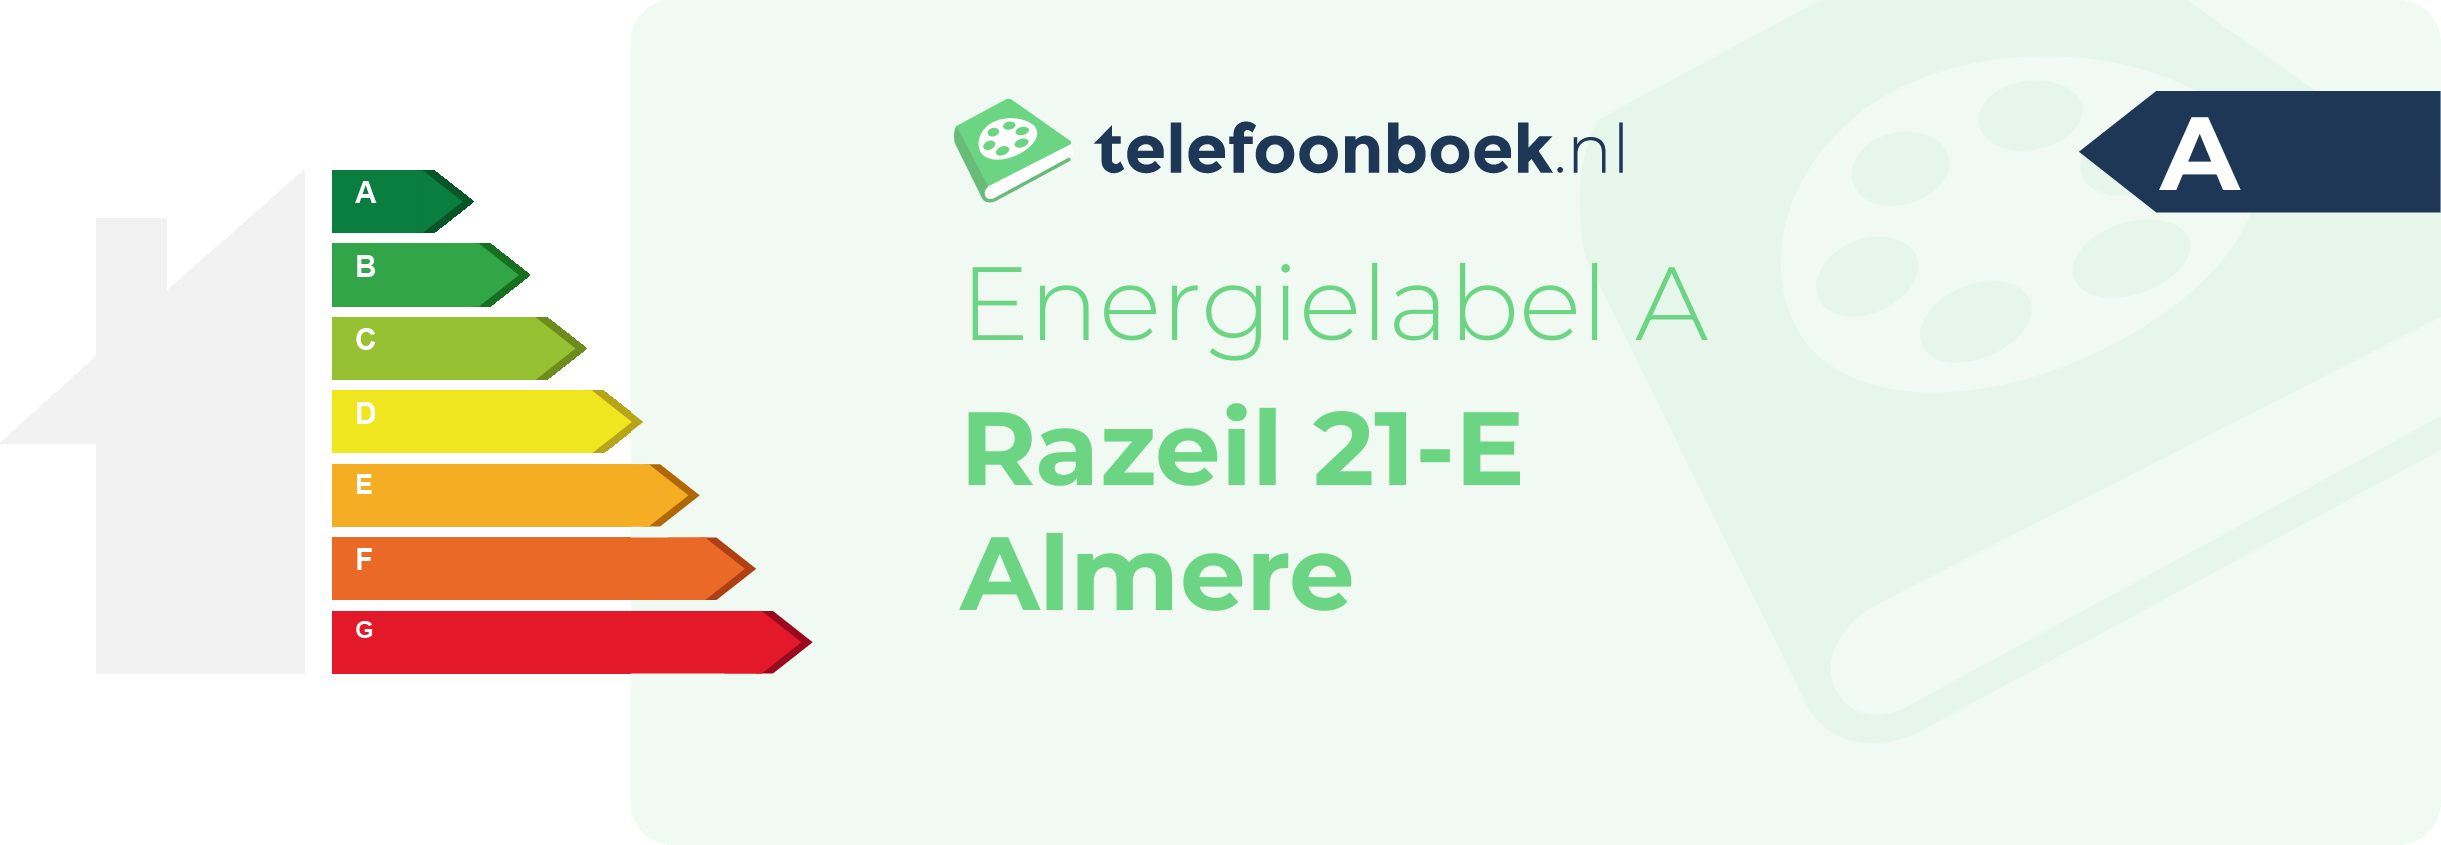 Energielabel Razeil 21-E Almere